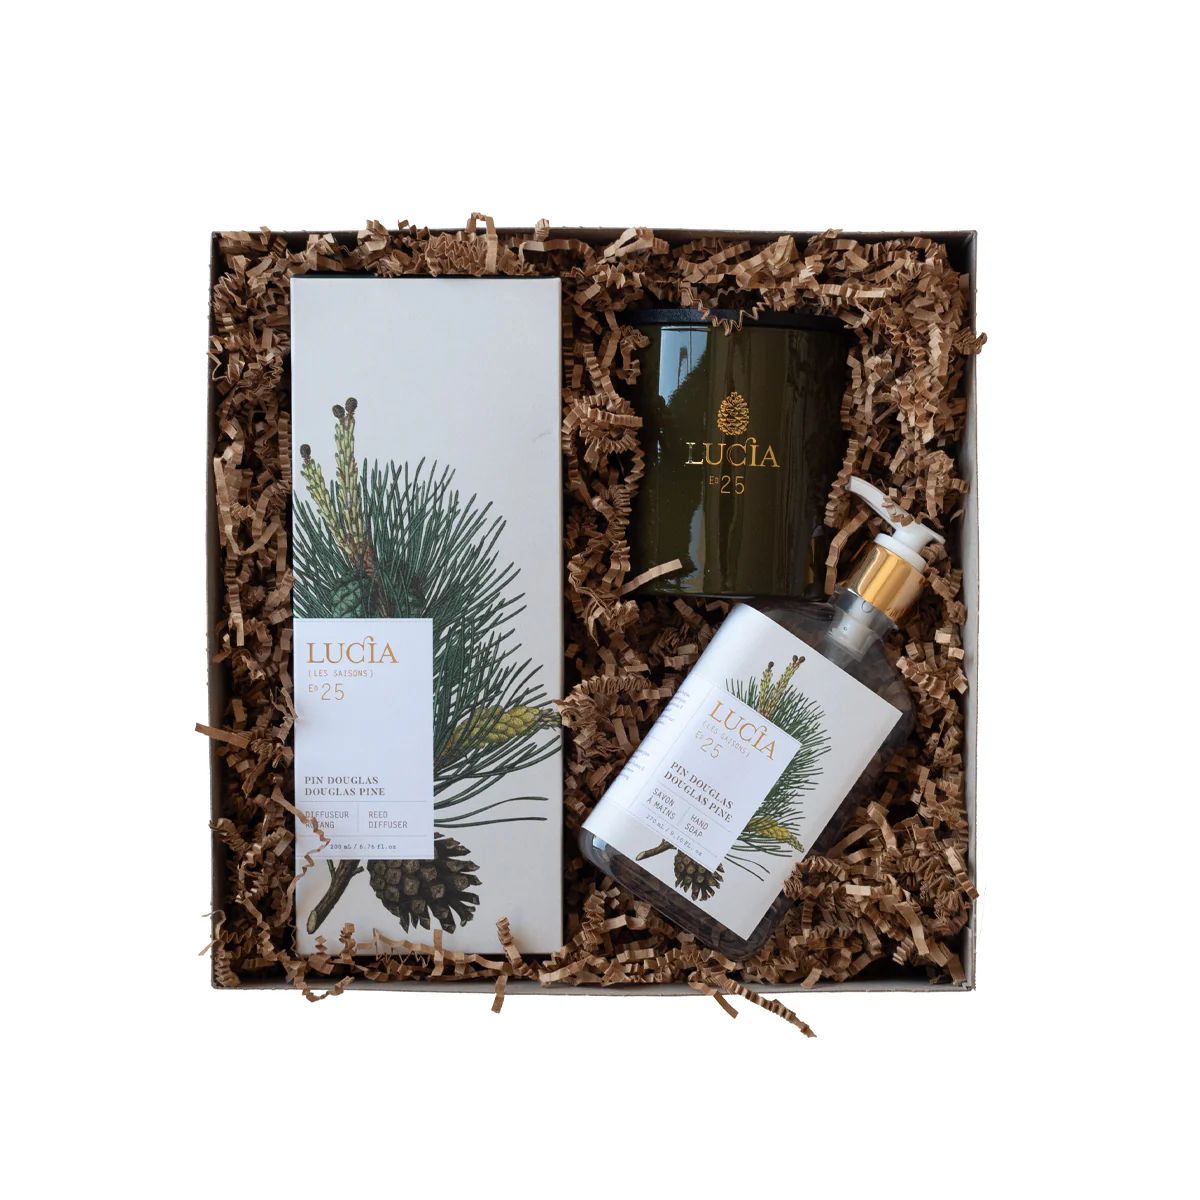 Lucia Douglas Pine Gift Box | Tuesday Made